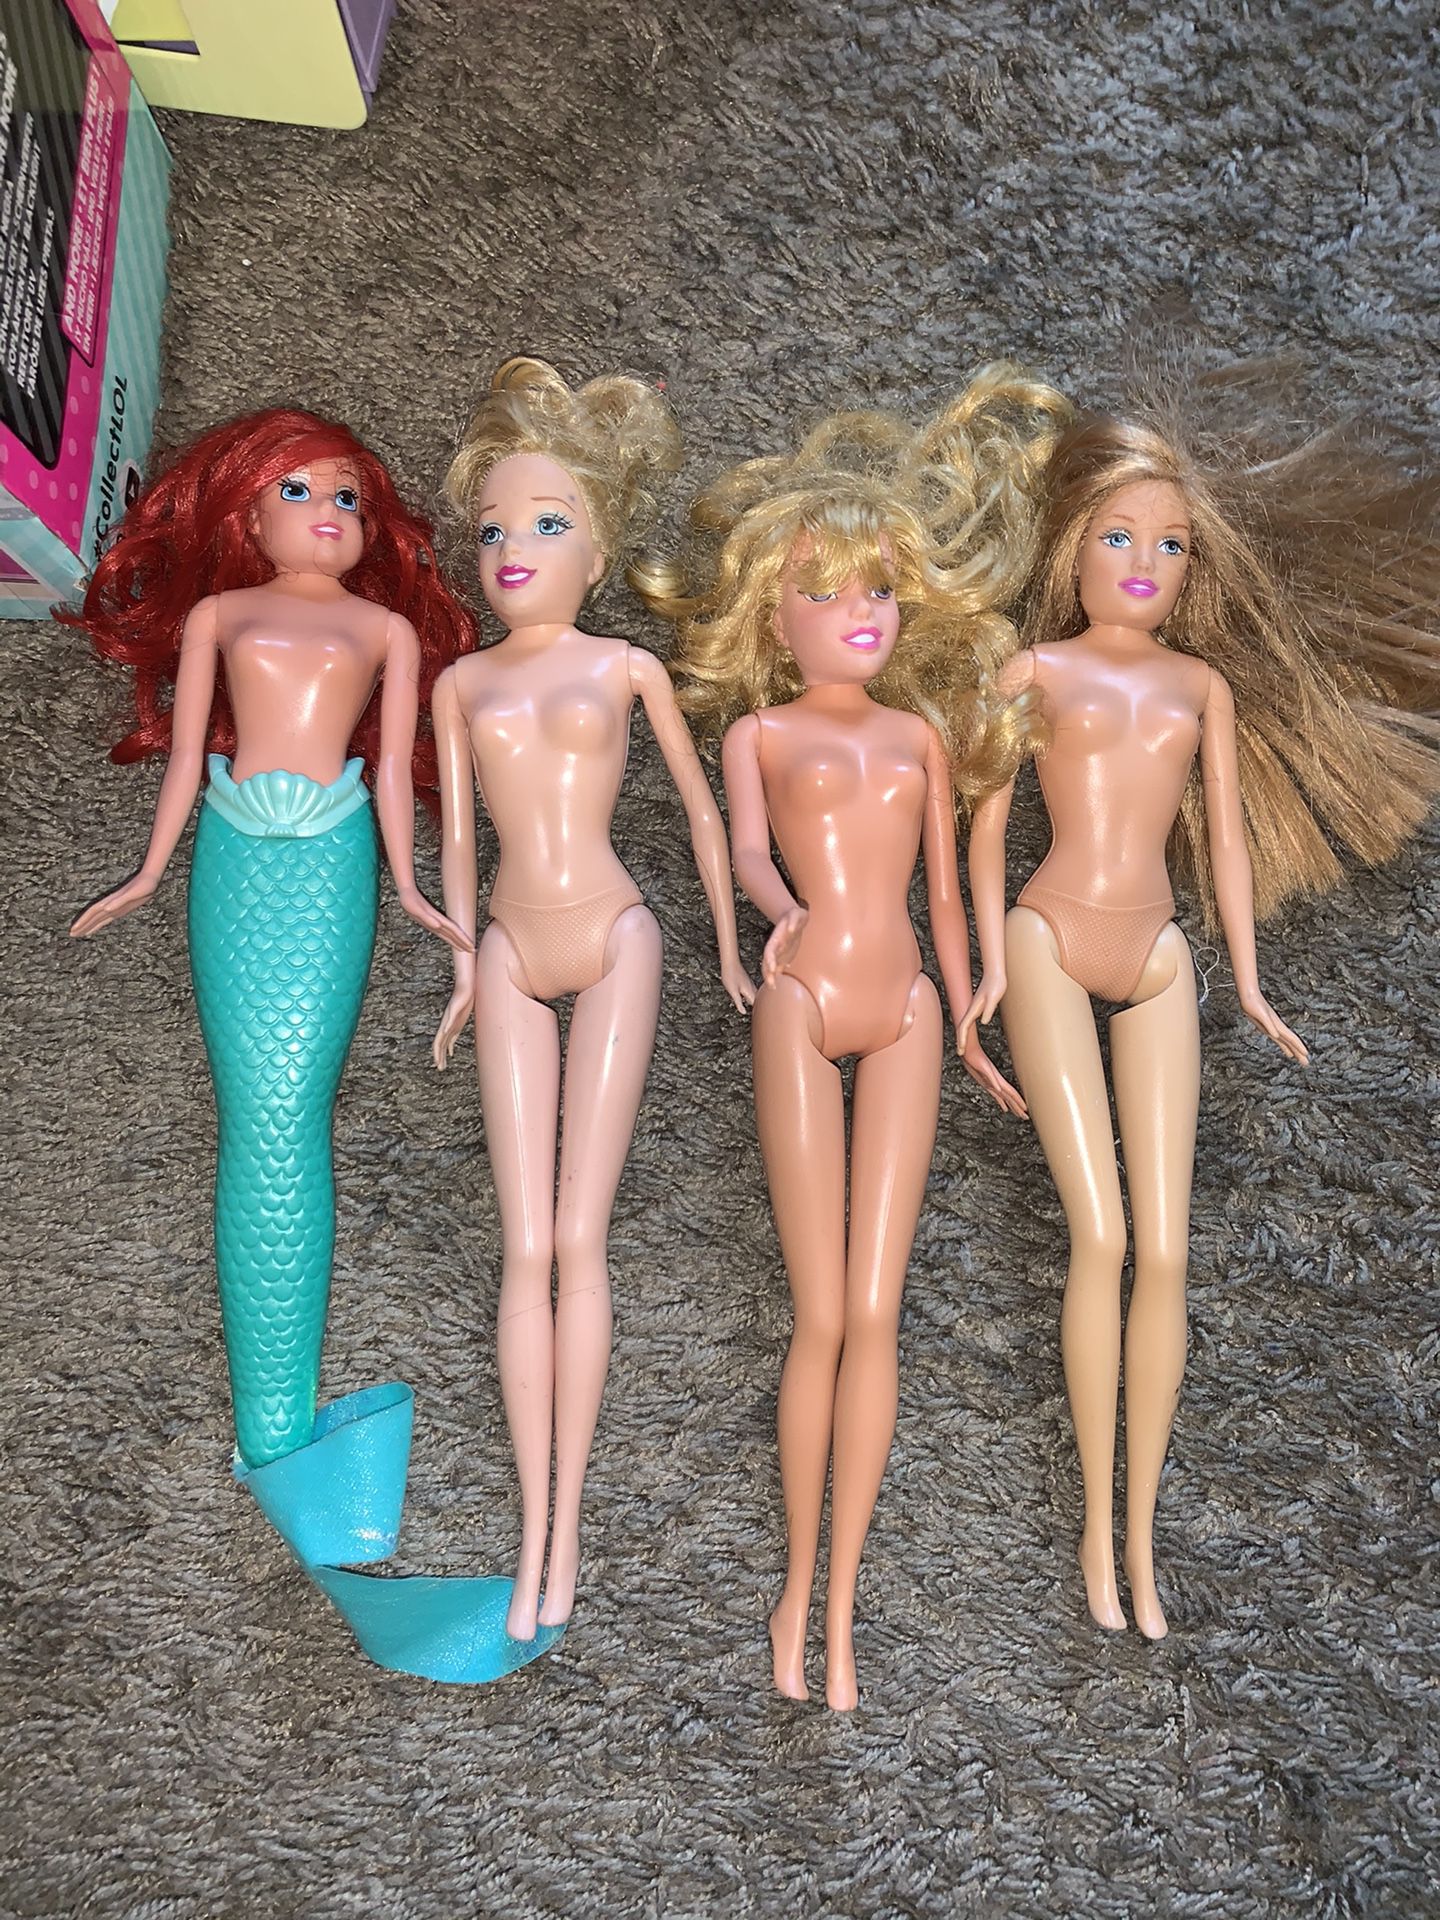 Disney Barbie dolls